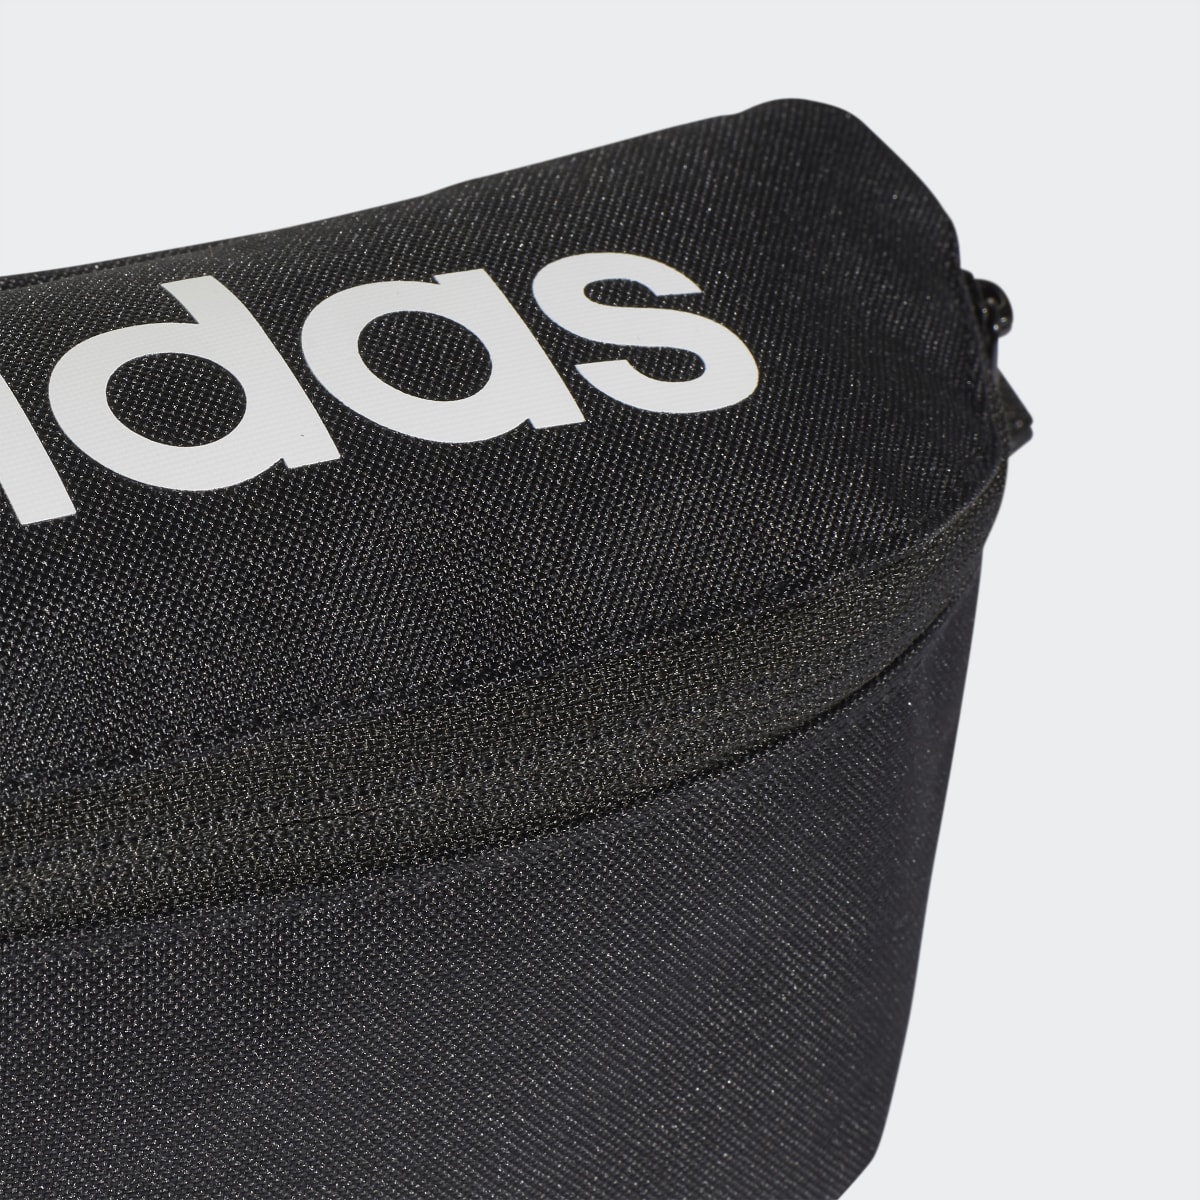 Adidas Daily Waist Bag. 6